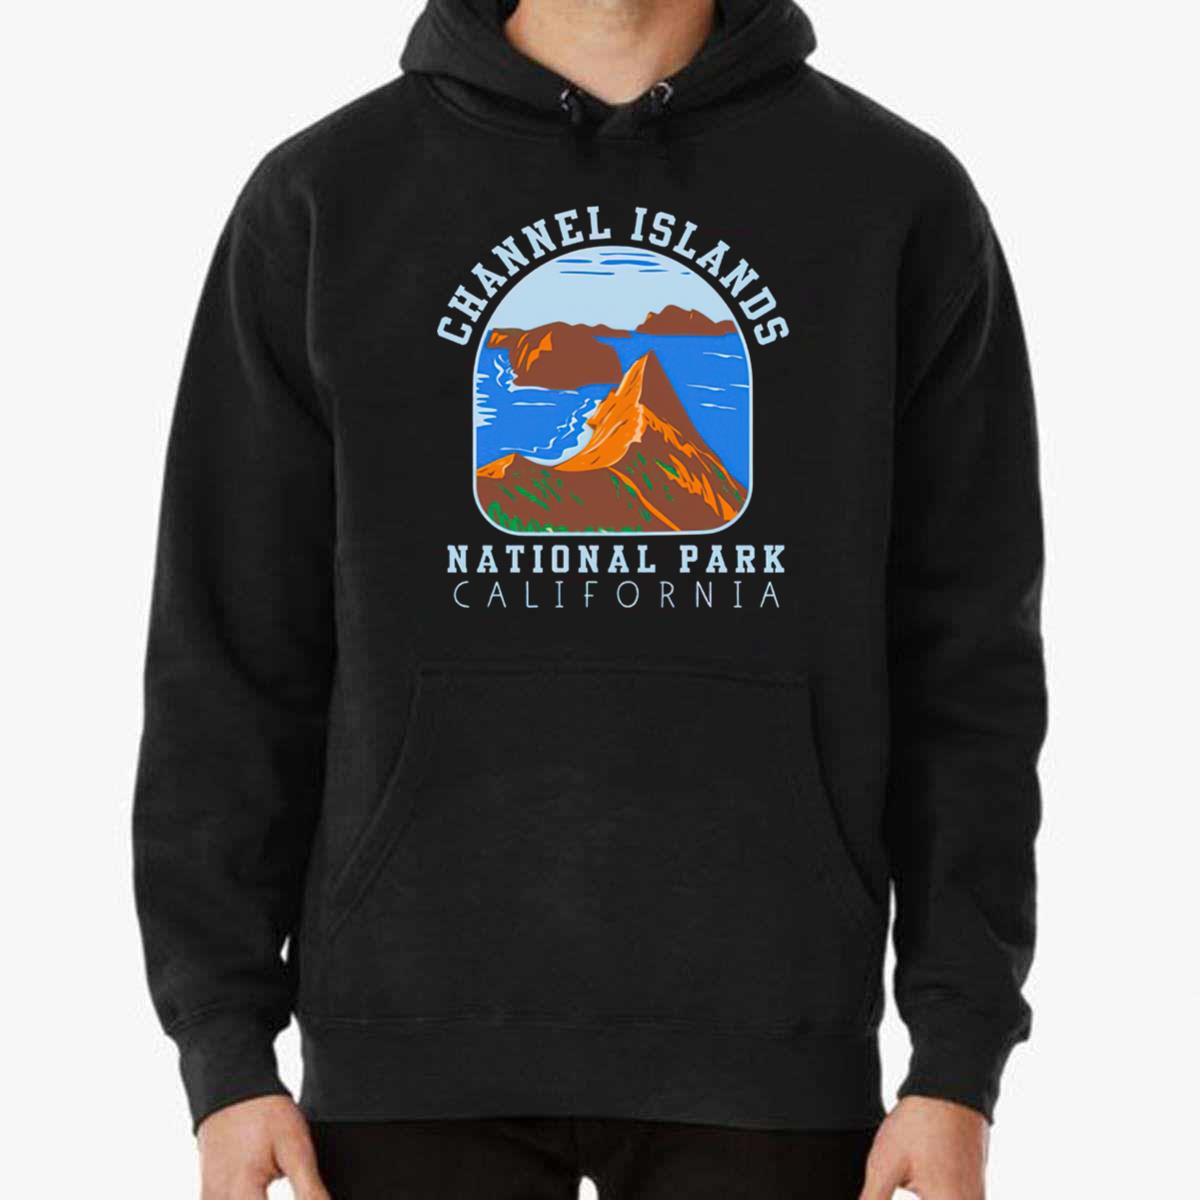 Channel Islands National Park California Retro T-Shirt